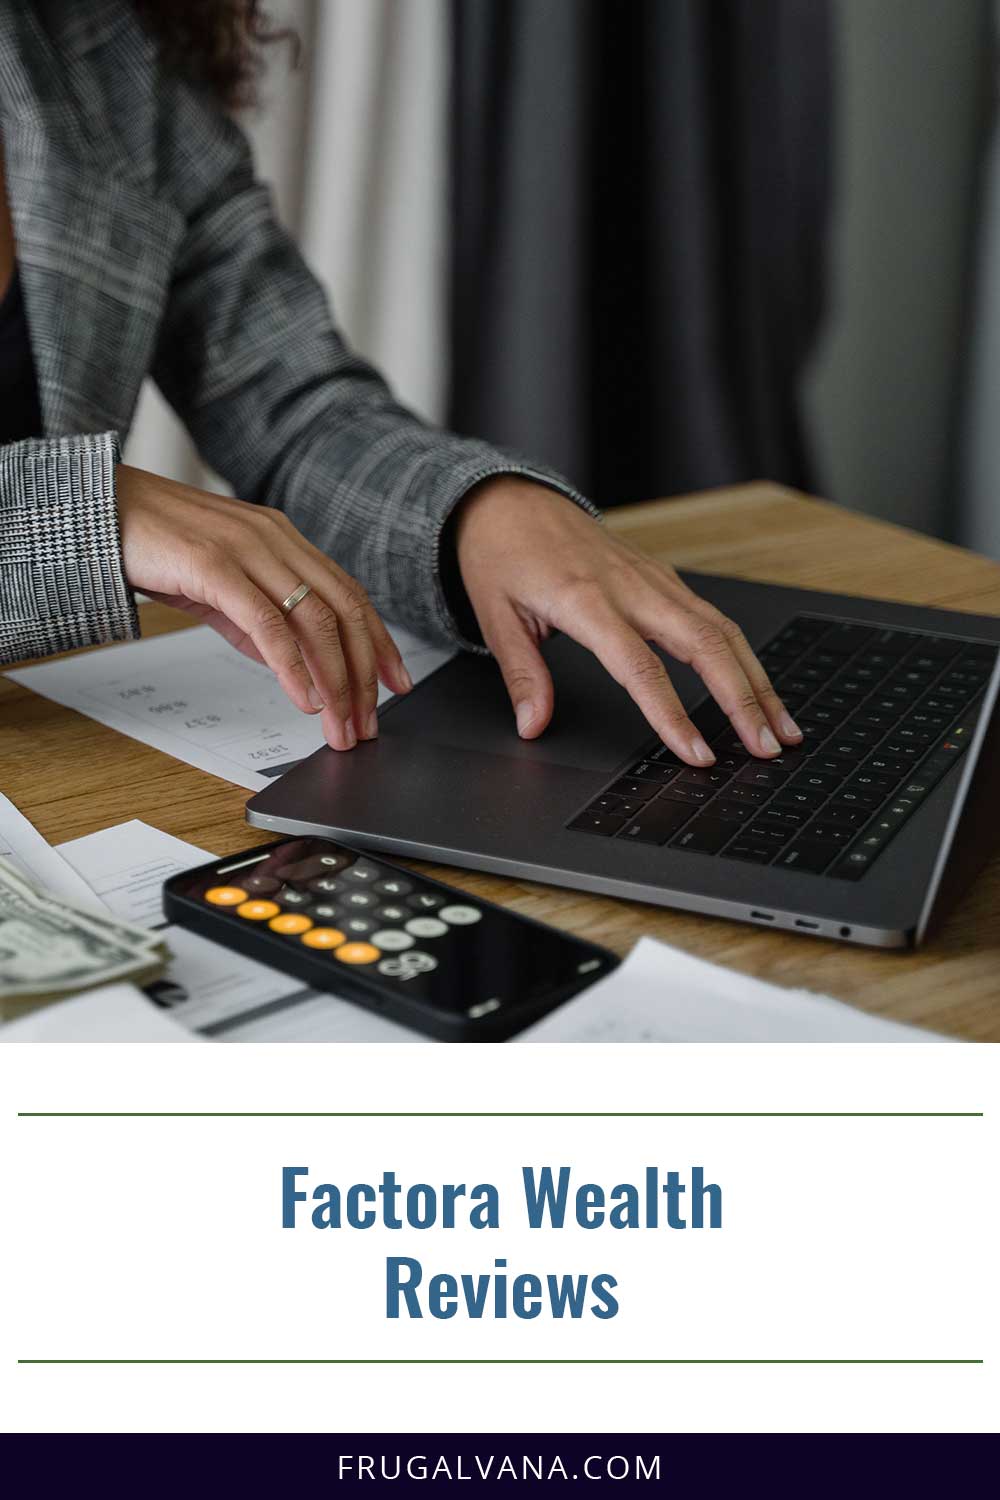 Woman using a laptop - Factora Wealth Reviews.